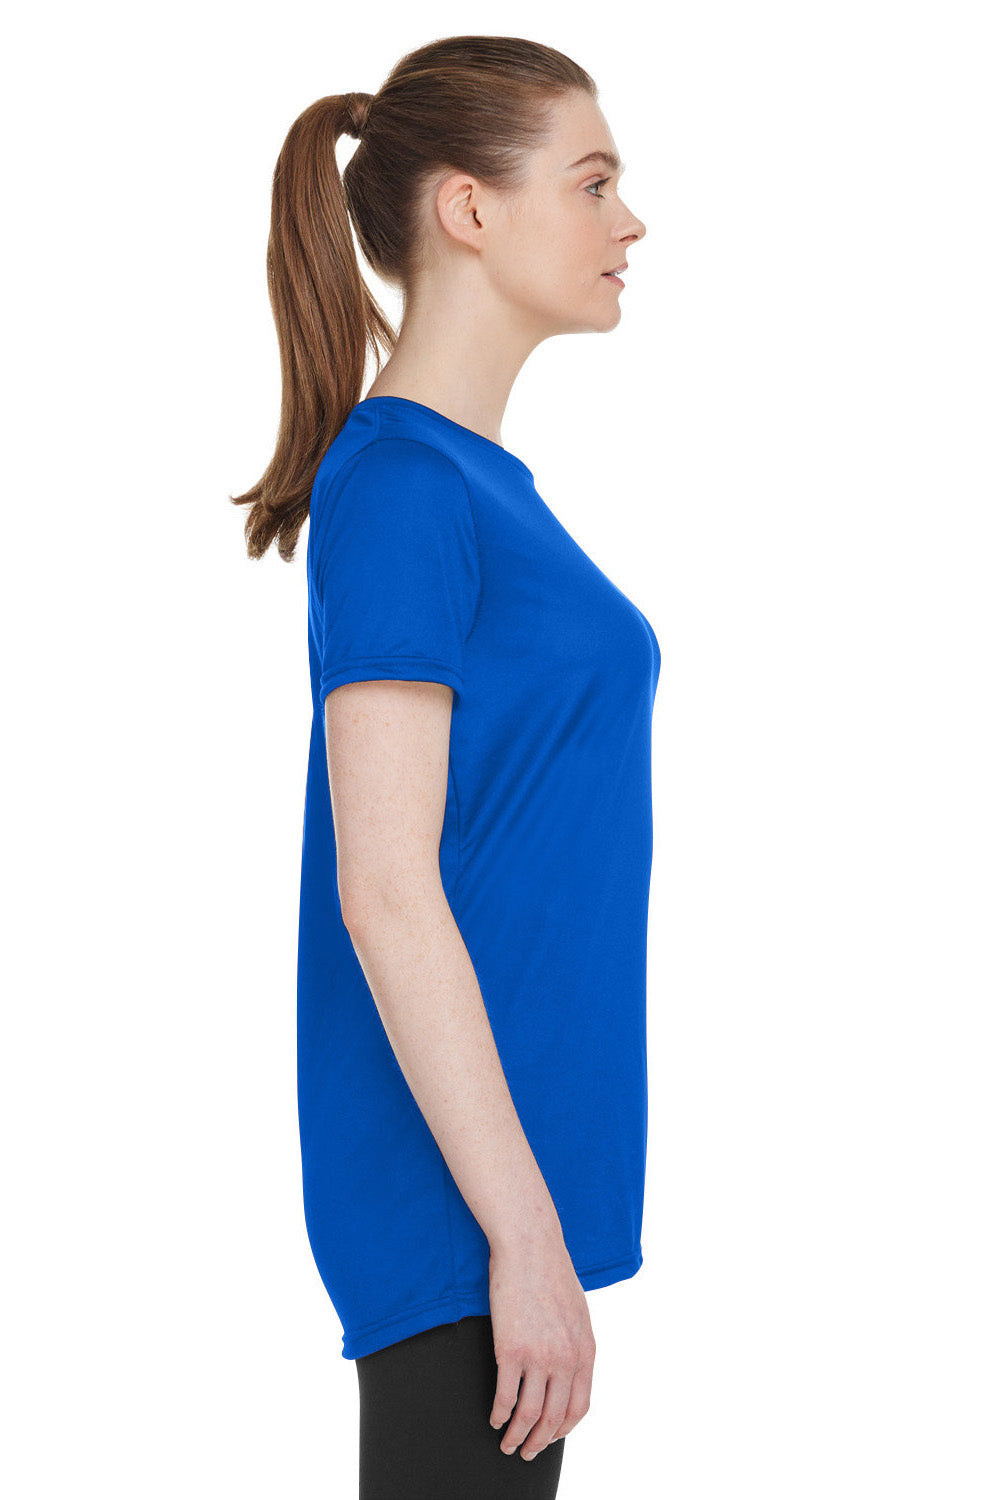 Under Armour 1376847 Womens Team Tech Moisture Wicking Short Sleeve Crewneck T-Shirt Royal Blue Model Side